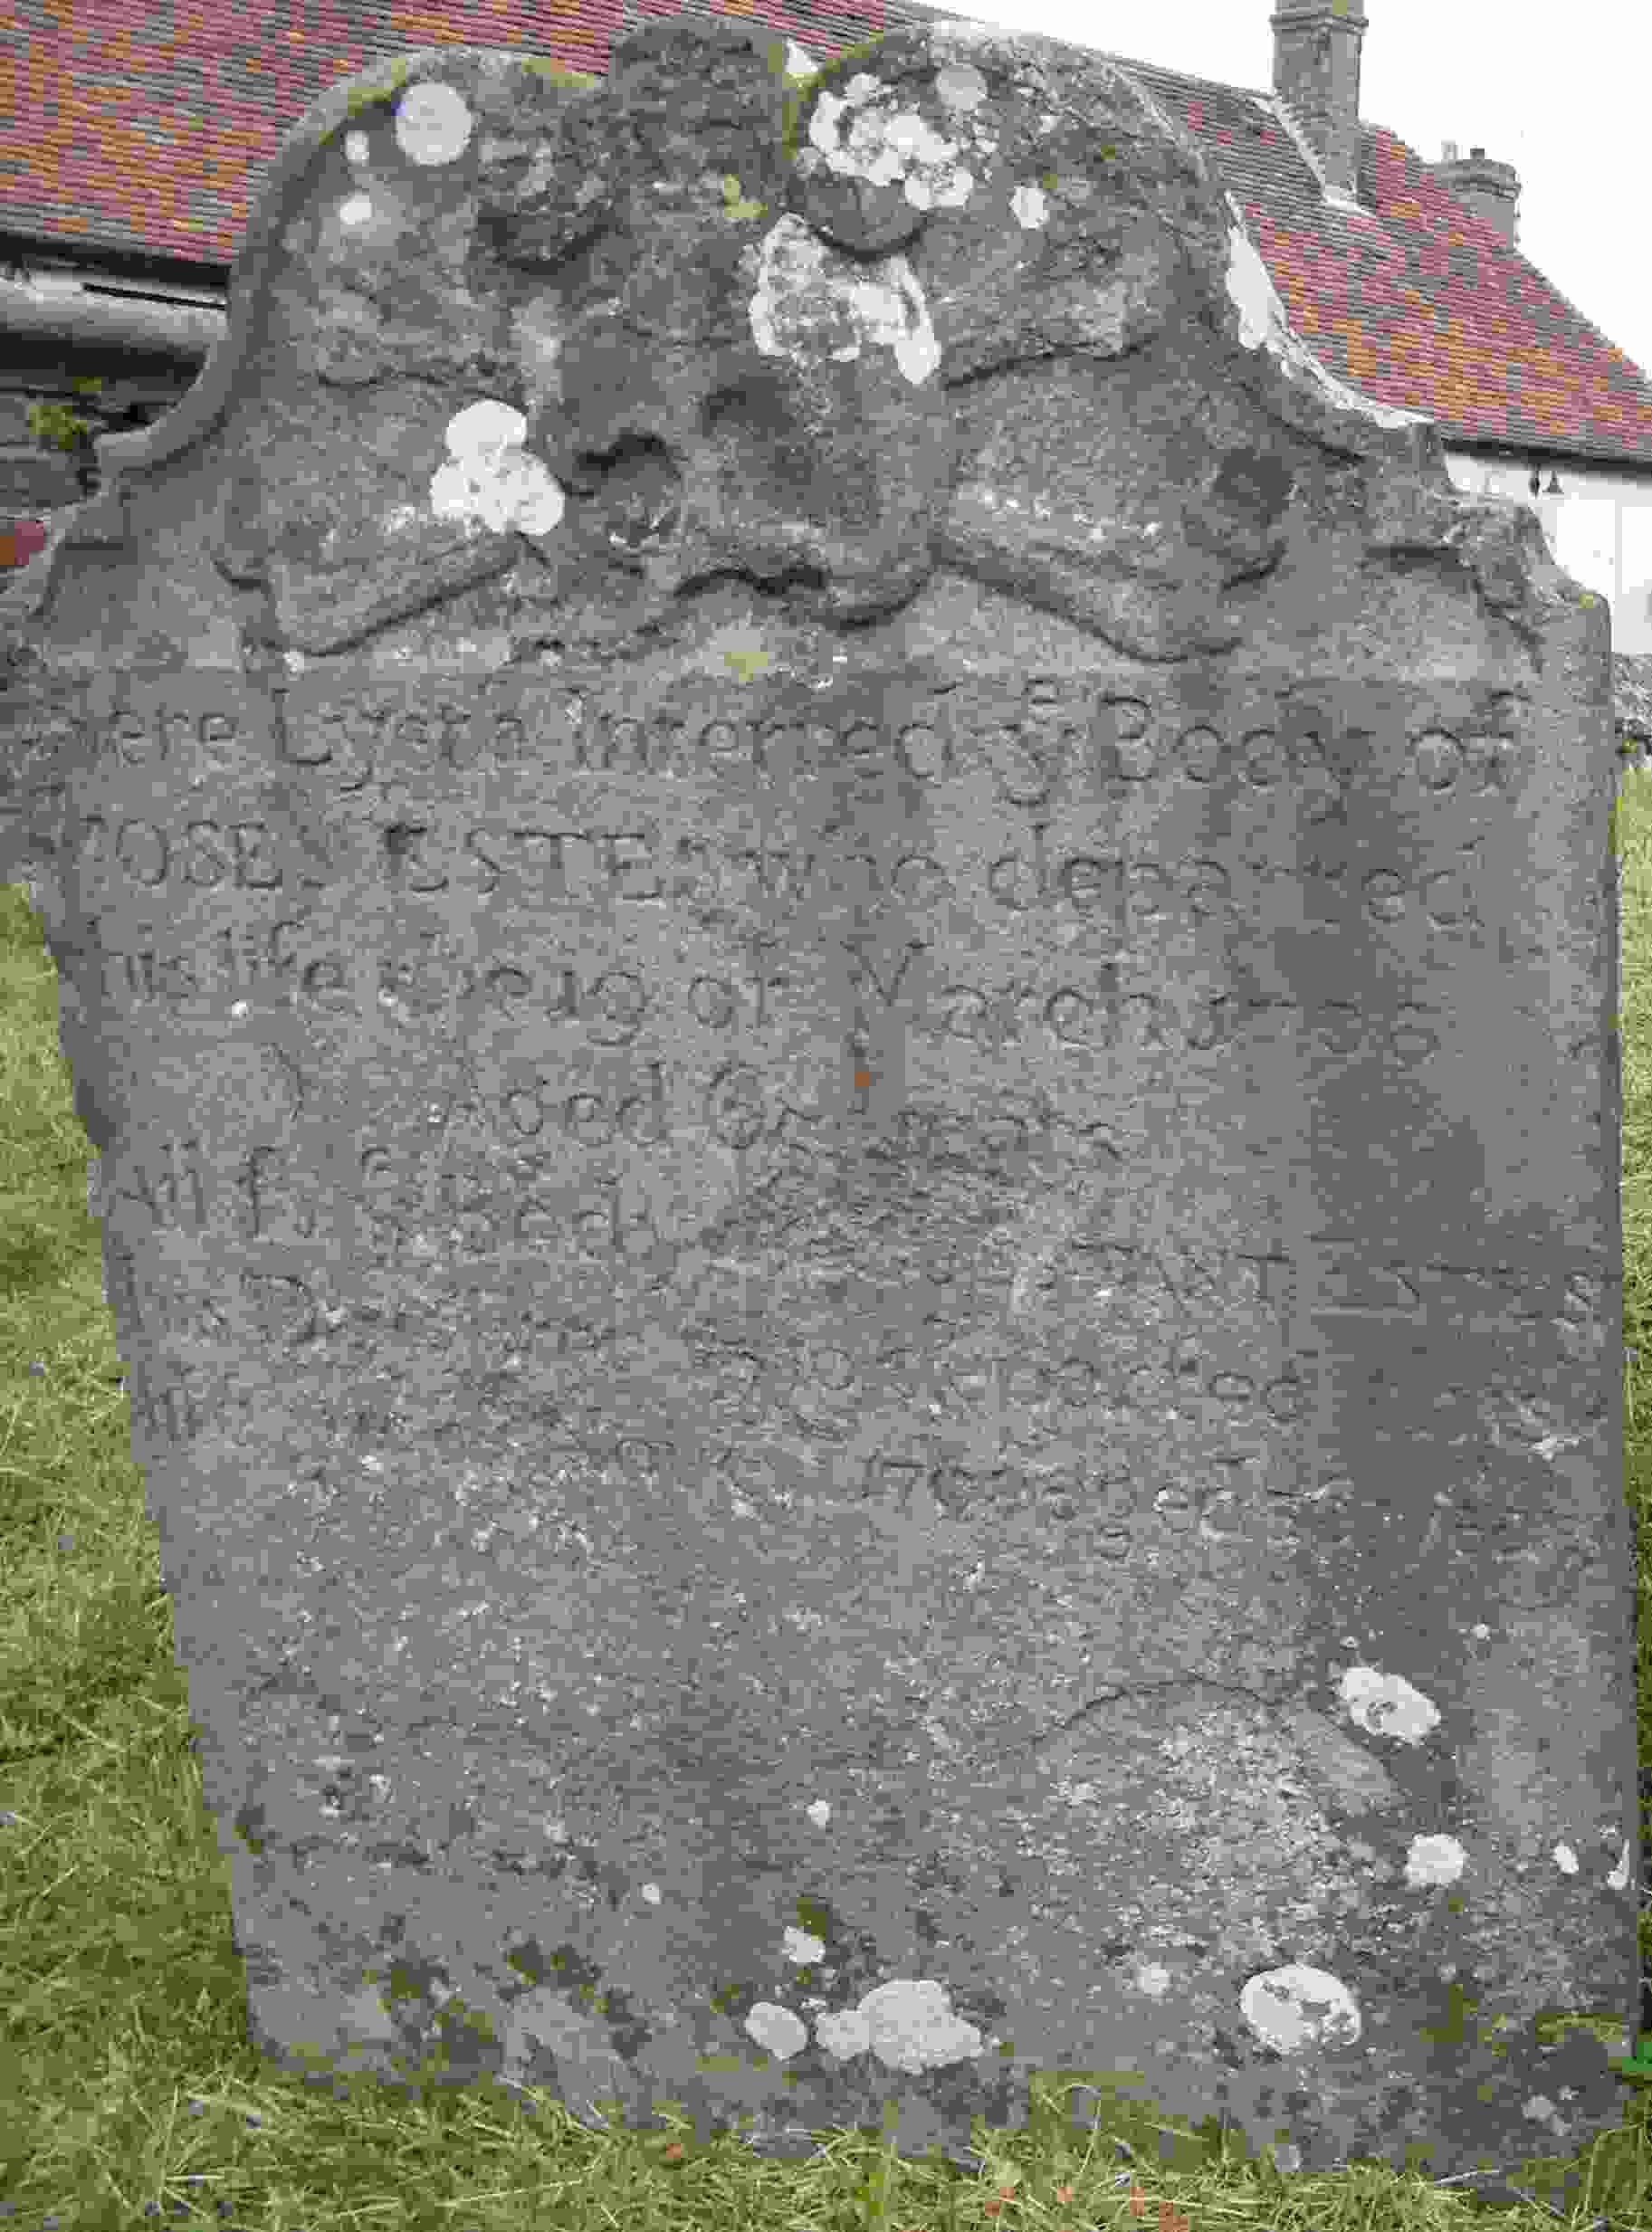 The gravestone of Moses Estes and Constant Estes